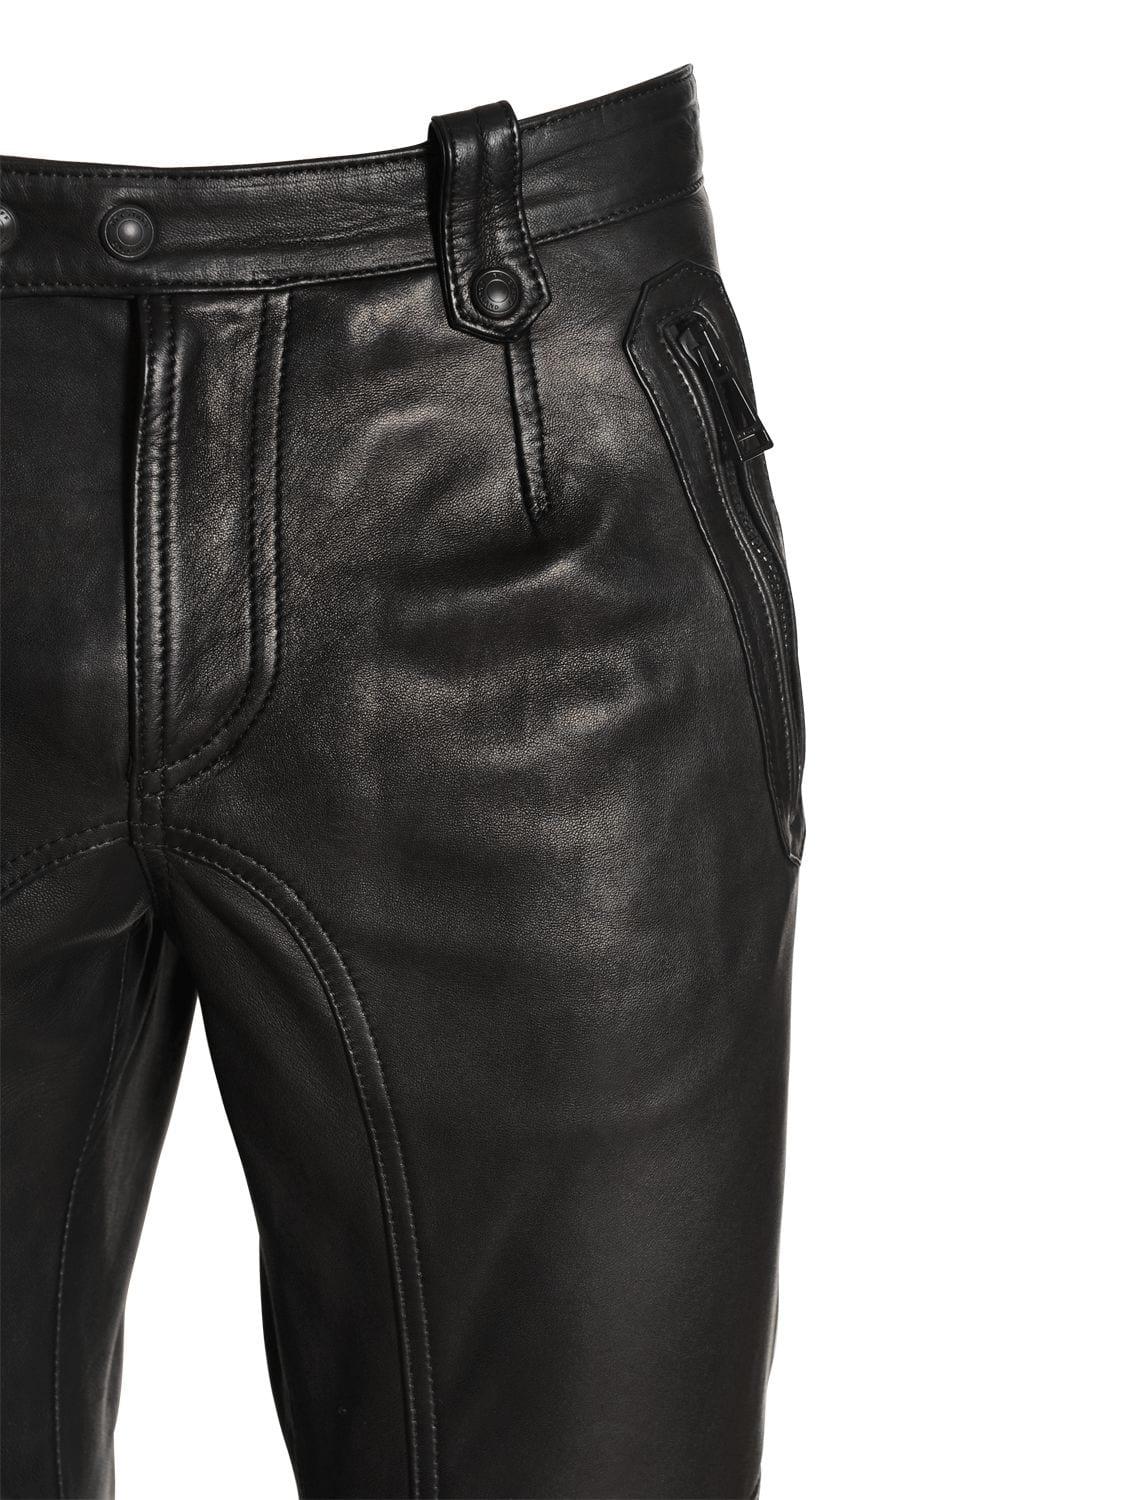 Belstaff Telford Smooth Leather Biker Pants in Black for Men - Lyst